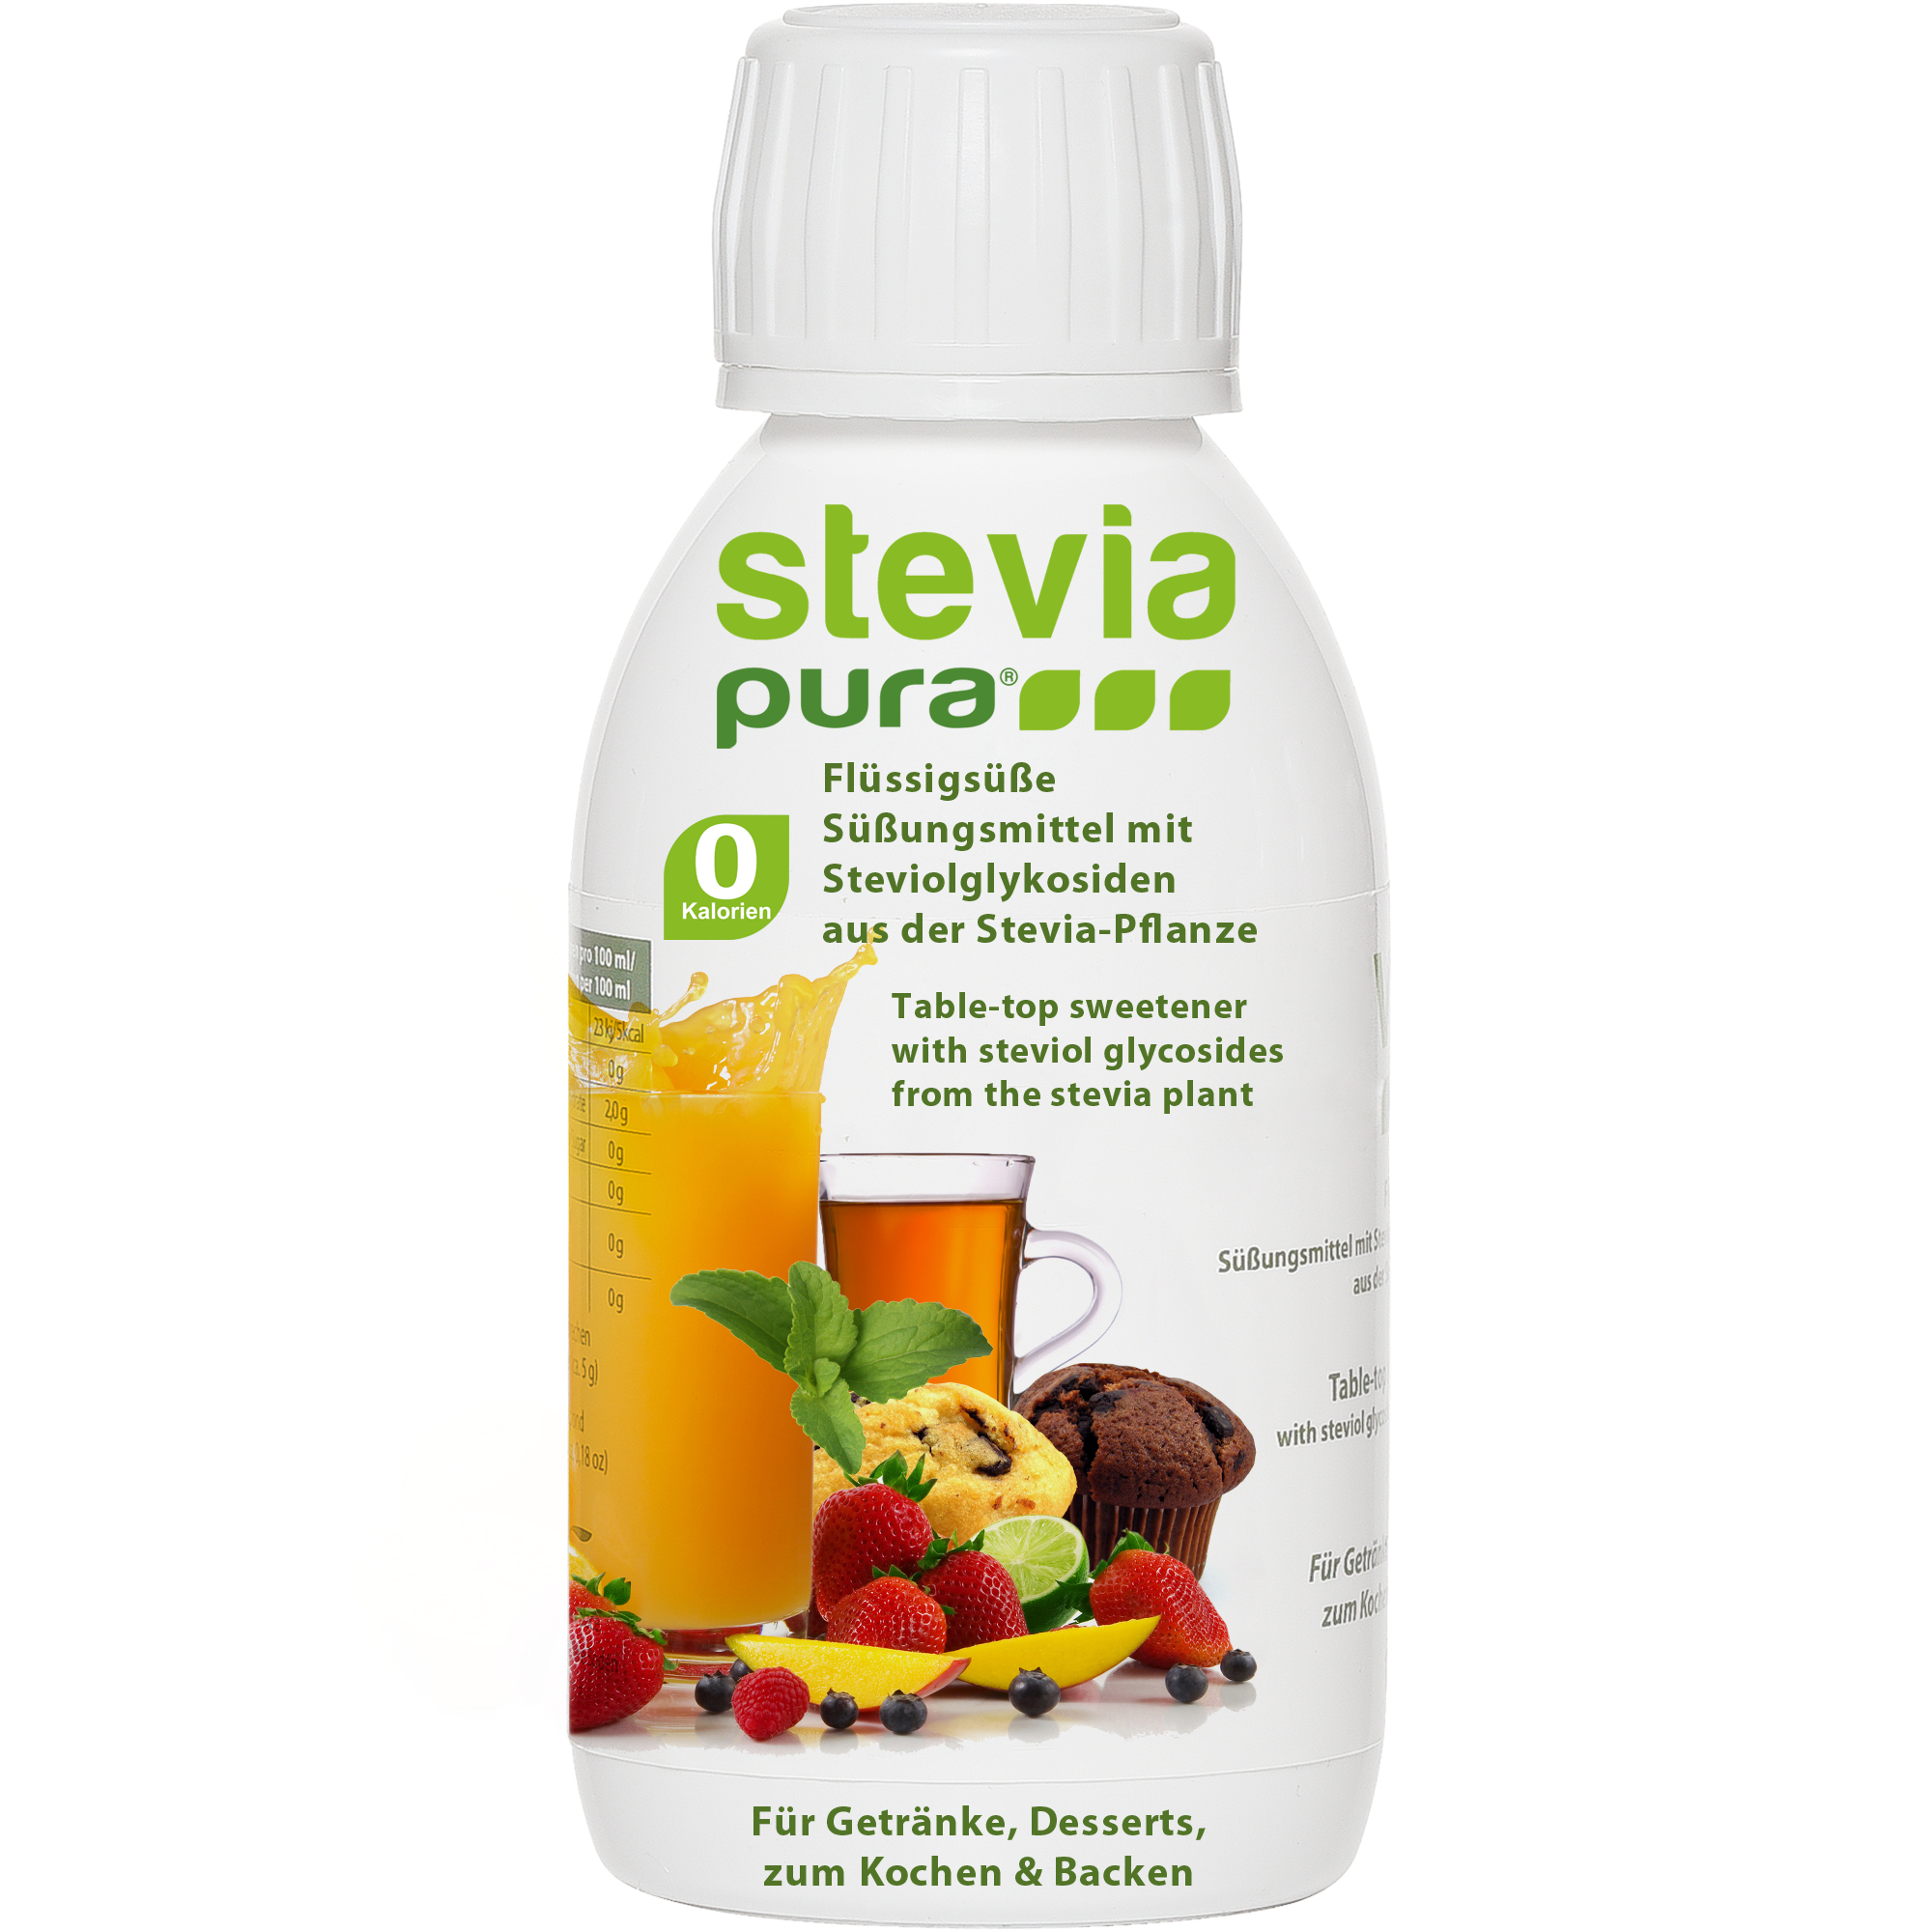 Een kwaliteitsproduct van de Stevia Group: steviapura Stevia vloeibare zoetstof.